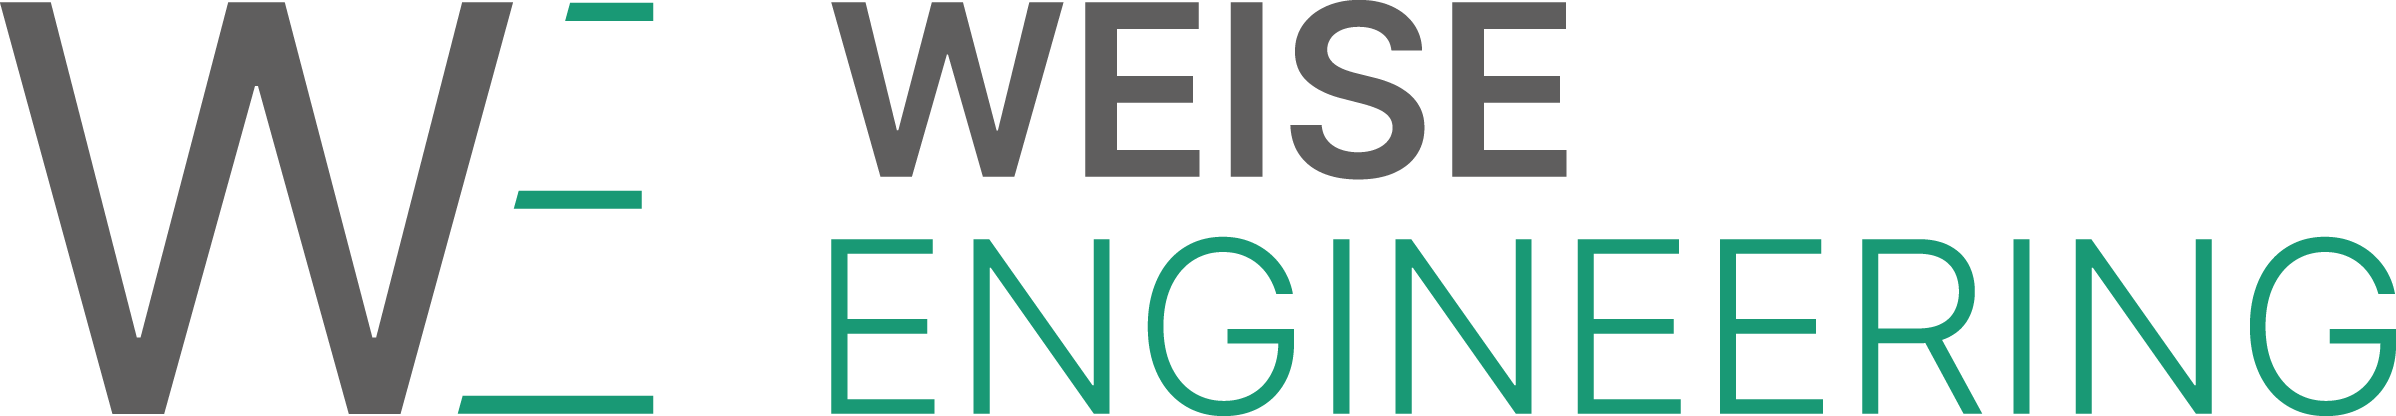 Weise Engineering GmbH